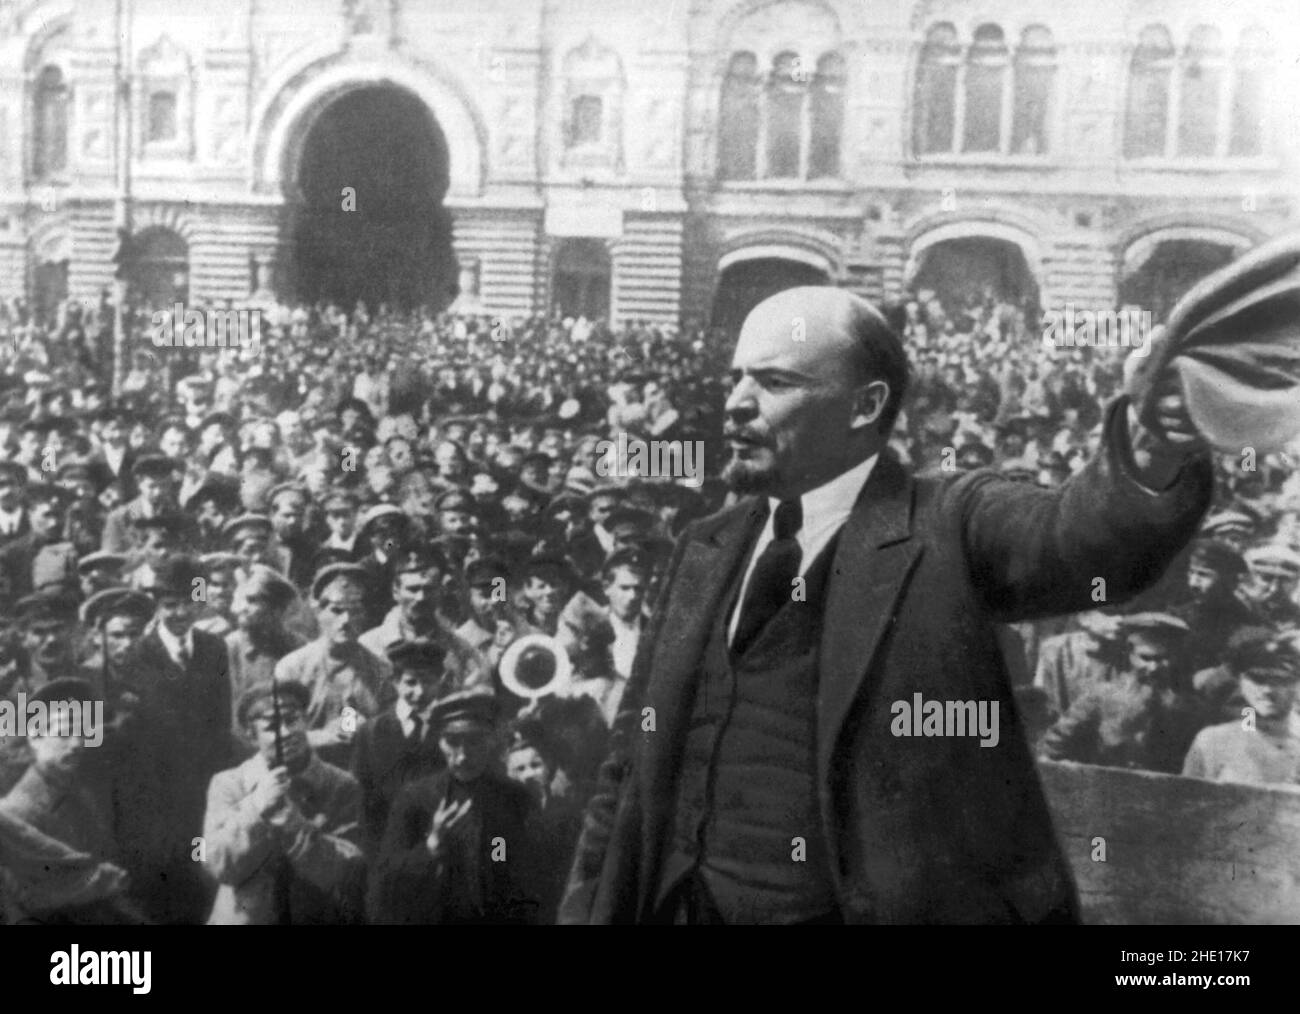 Lenin addressing crowds in the street in 1917 Stock Photo